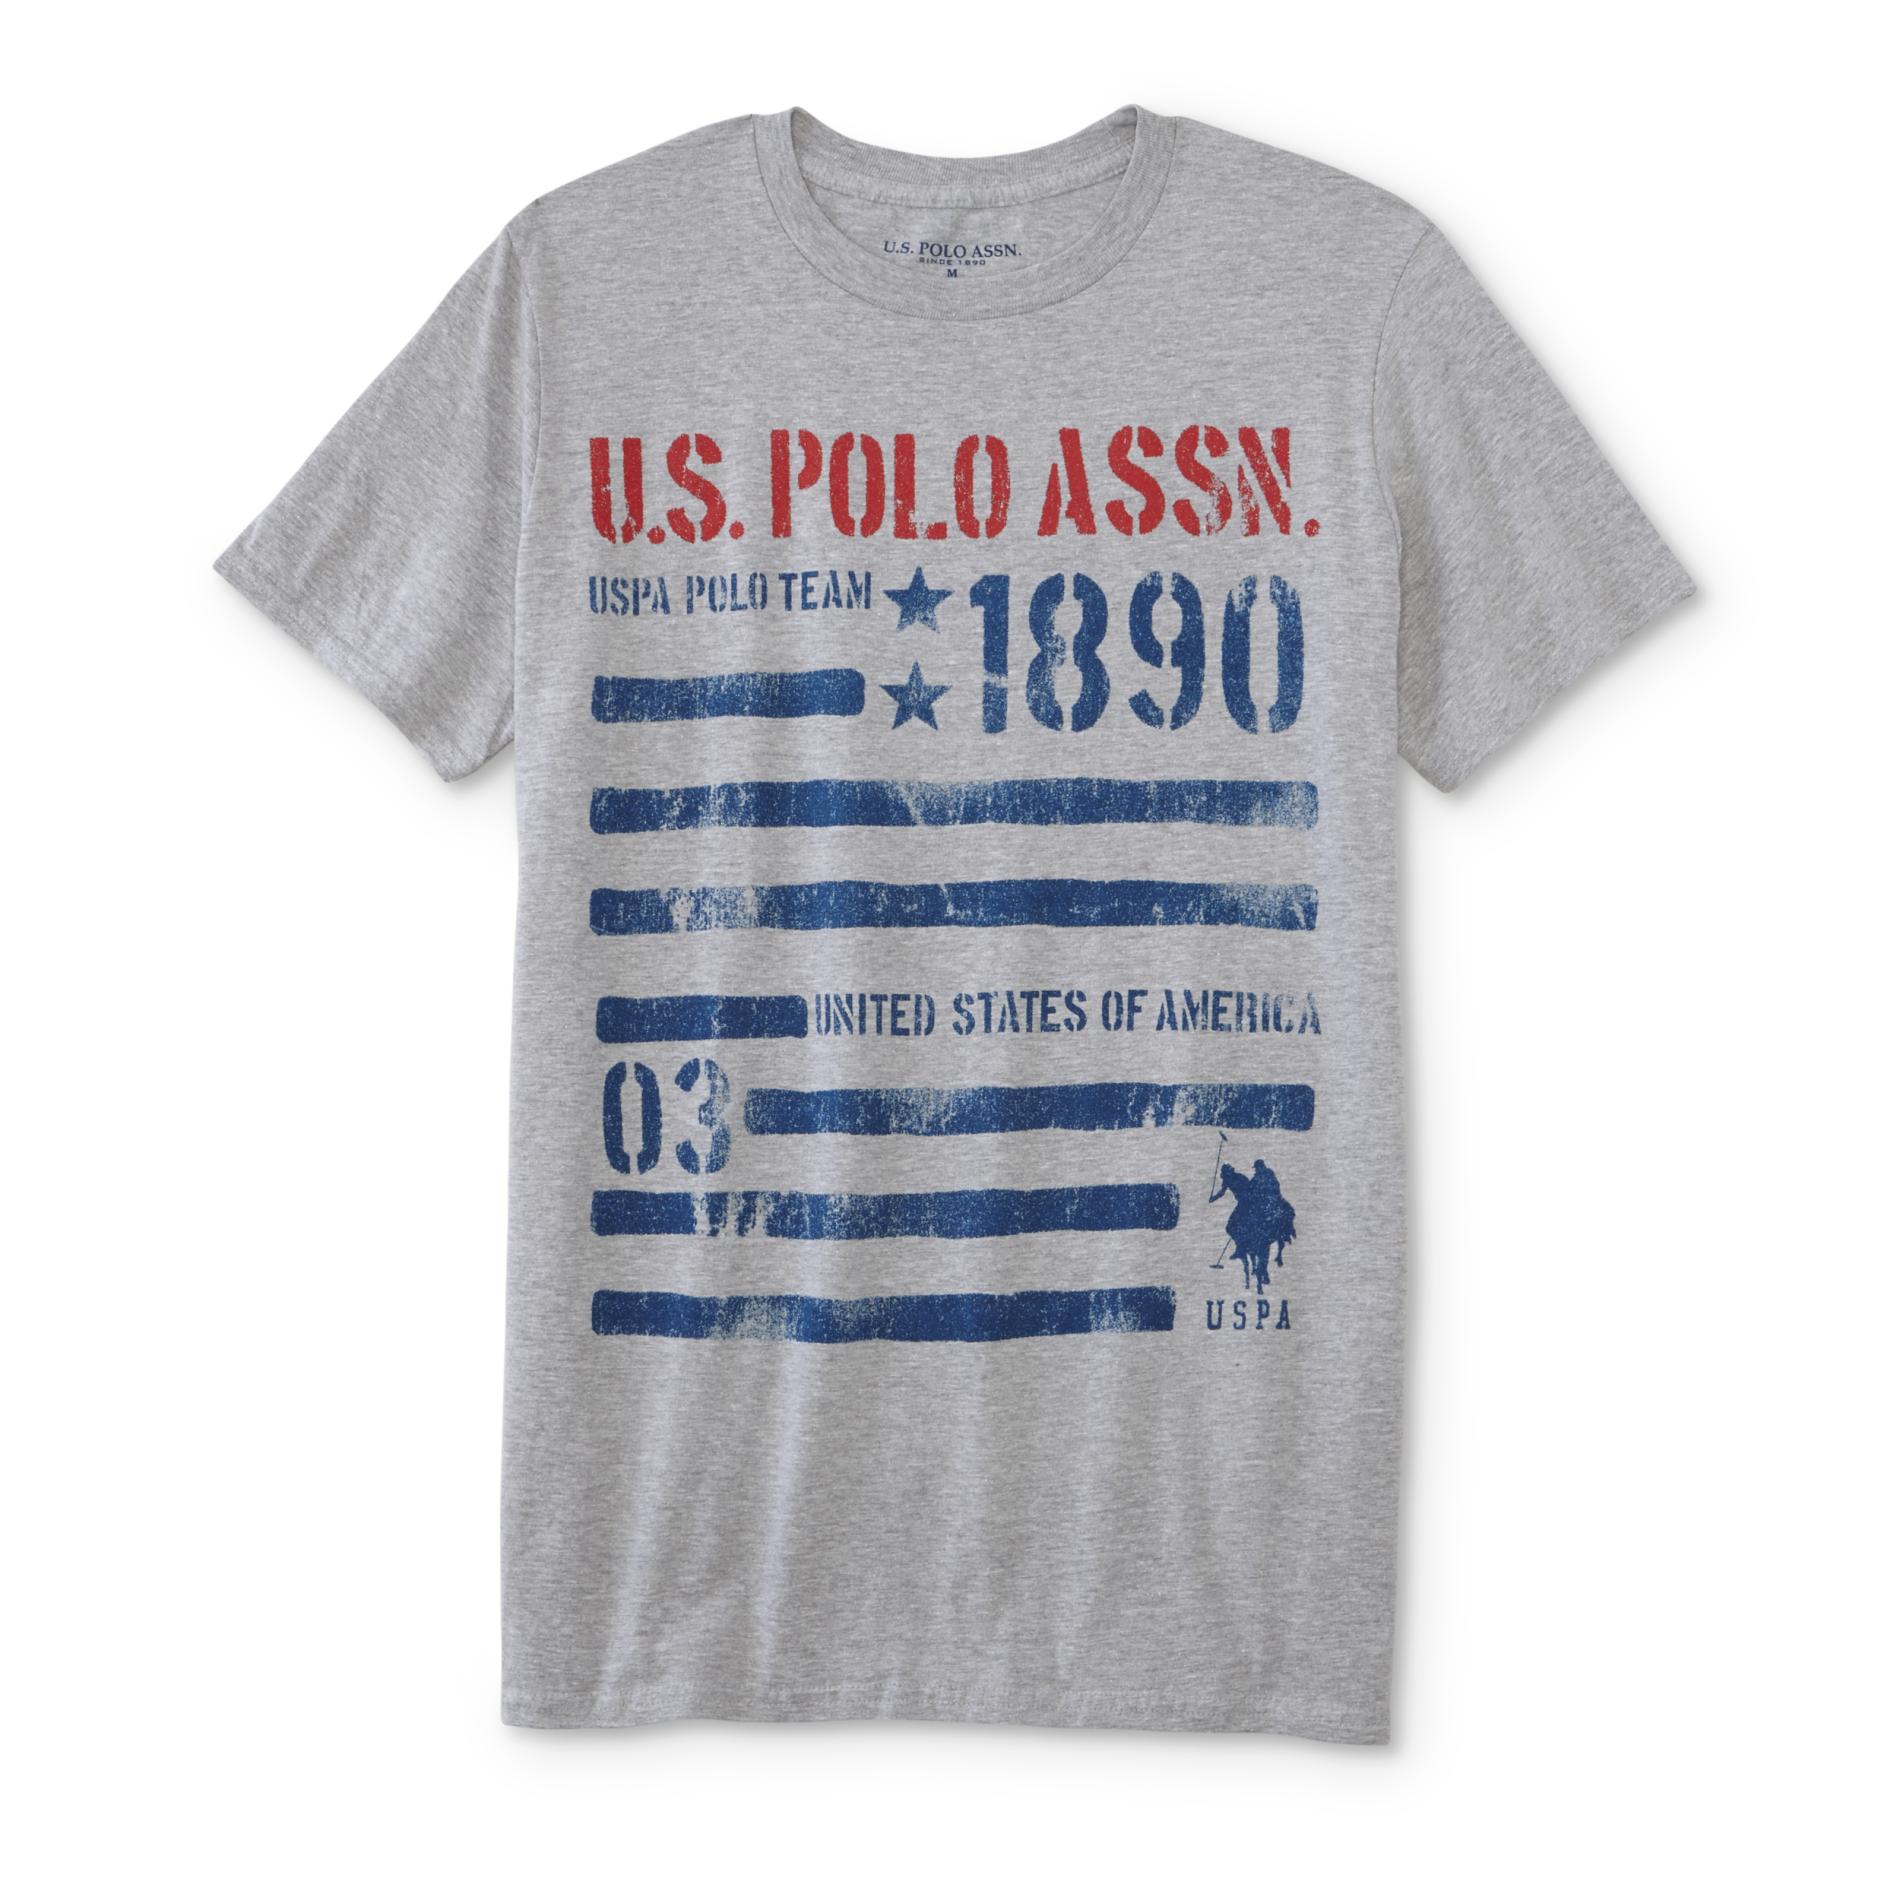 U.S. Polo Assn. Men's Graphic T-Shirt - American Flag